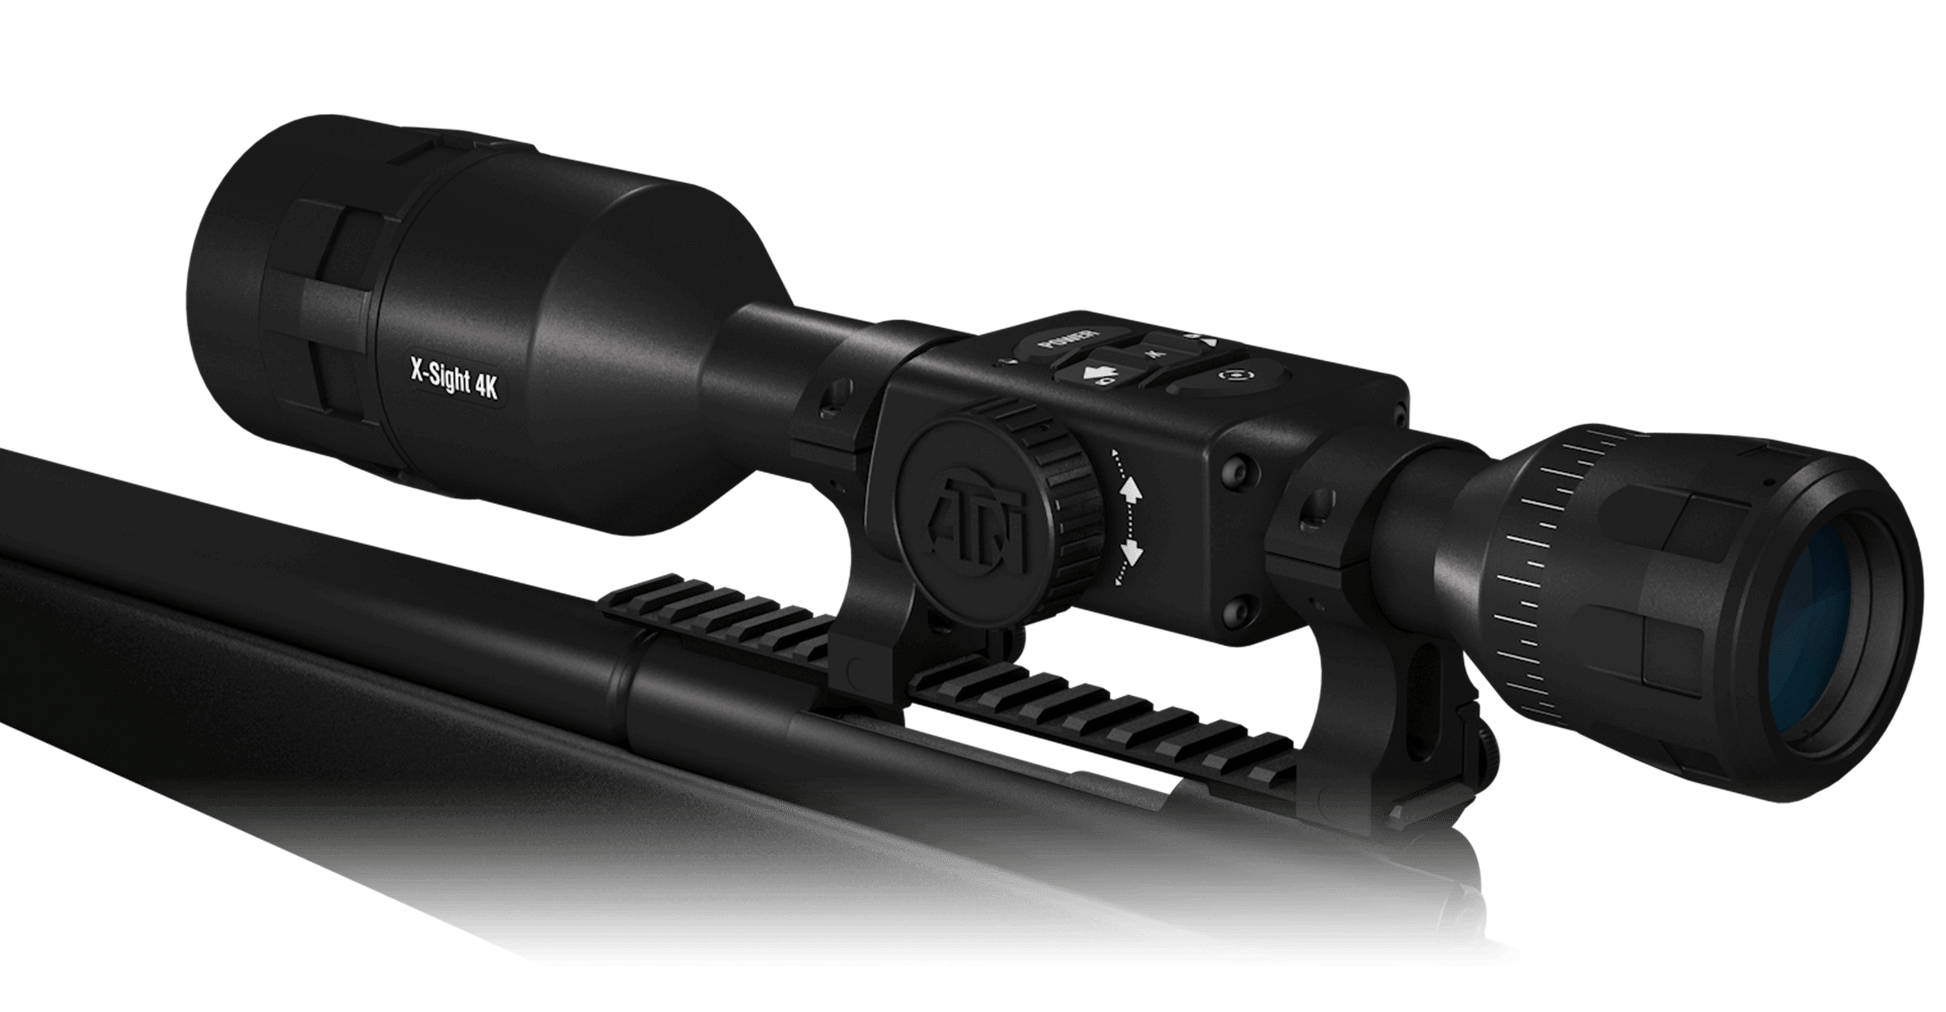 Manual for ATN X-Sight 5/5 LRF Smart Ultra HD Rifle Scope